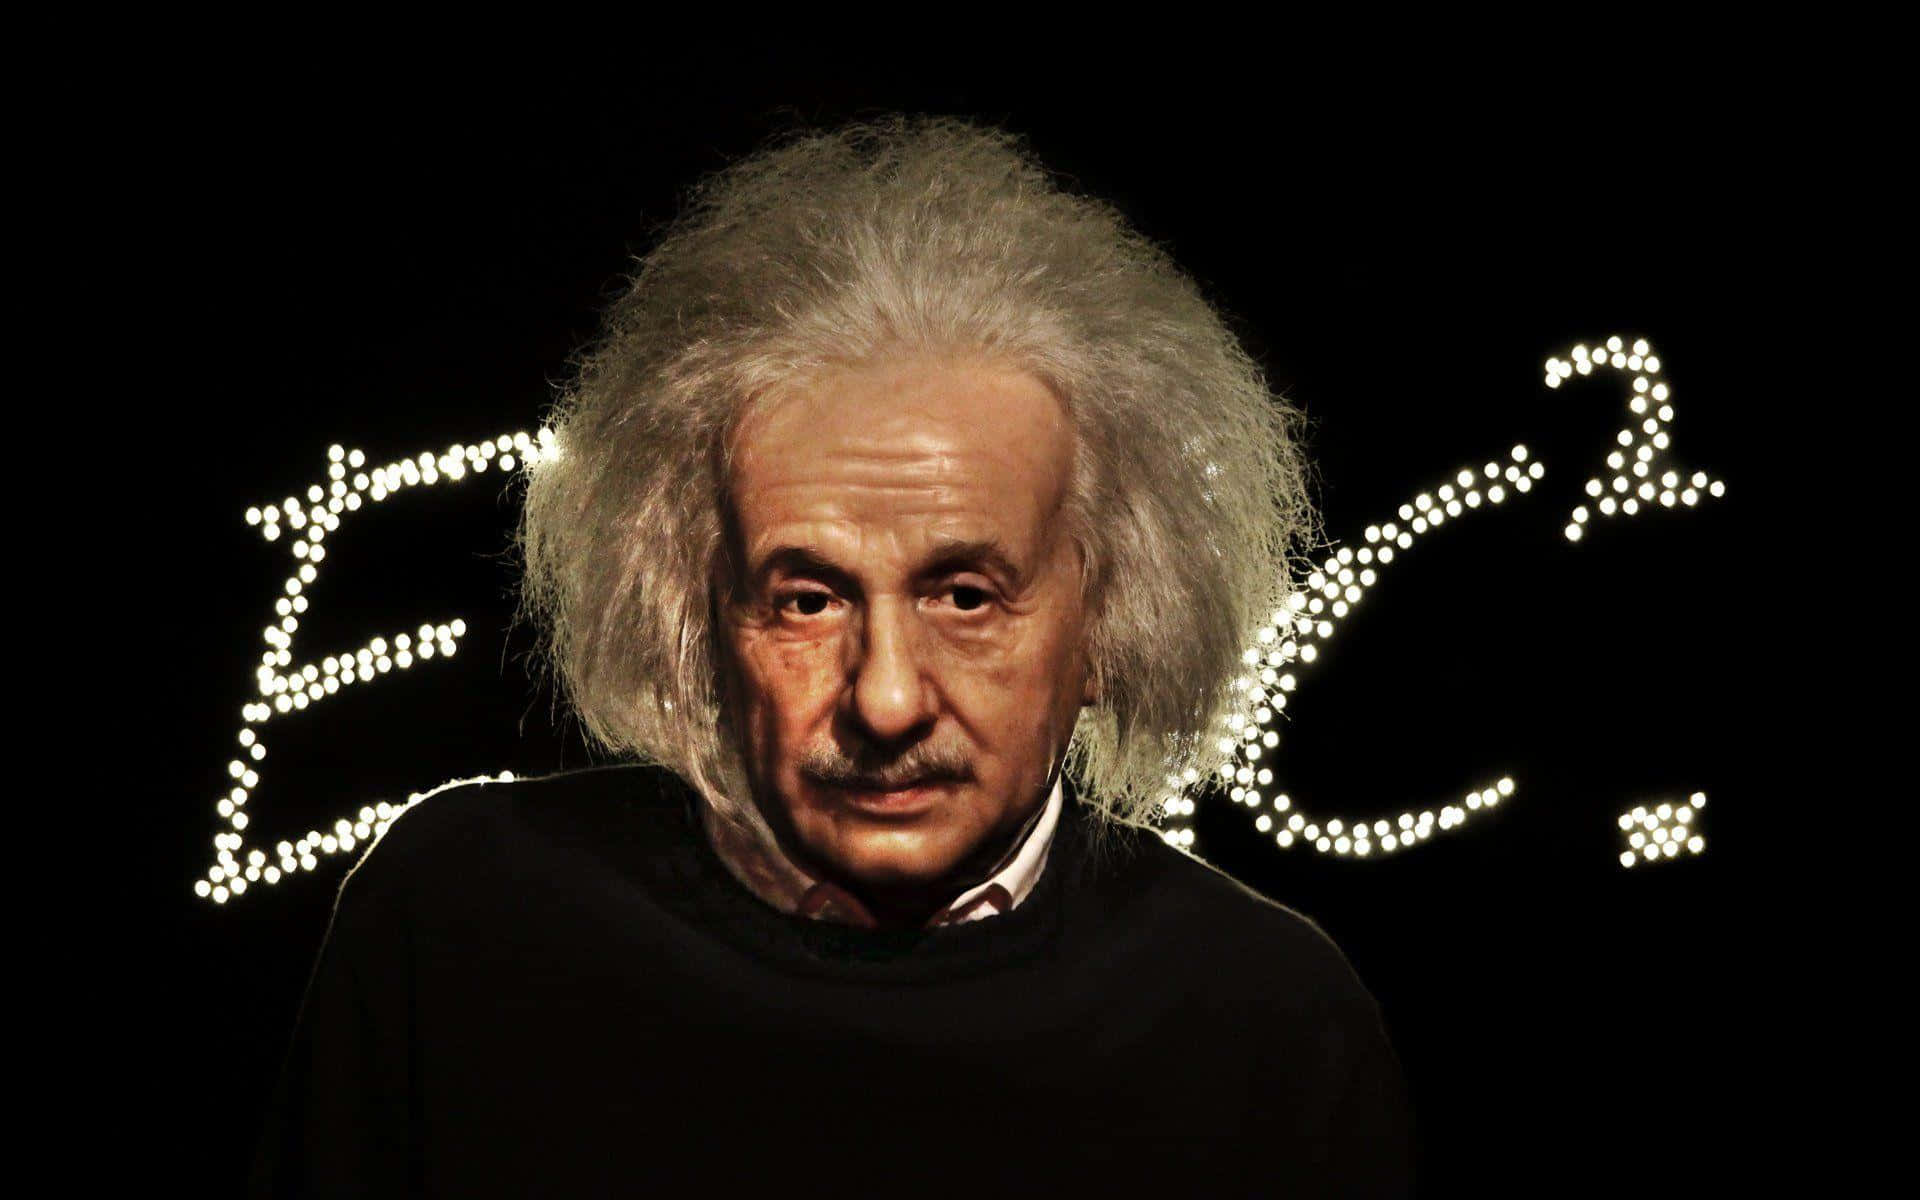 Albert Einstein E=mc2 Portrait Wallpaper